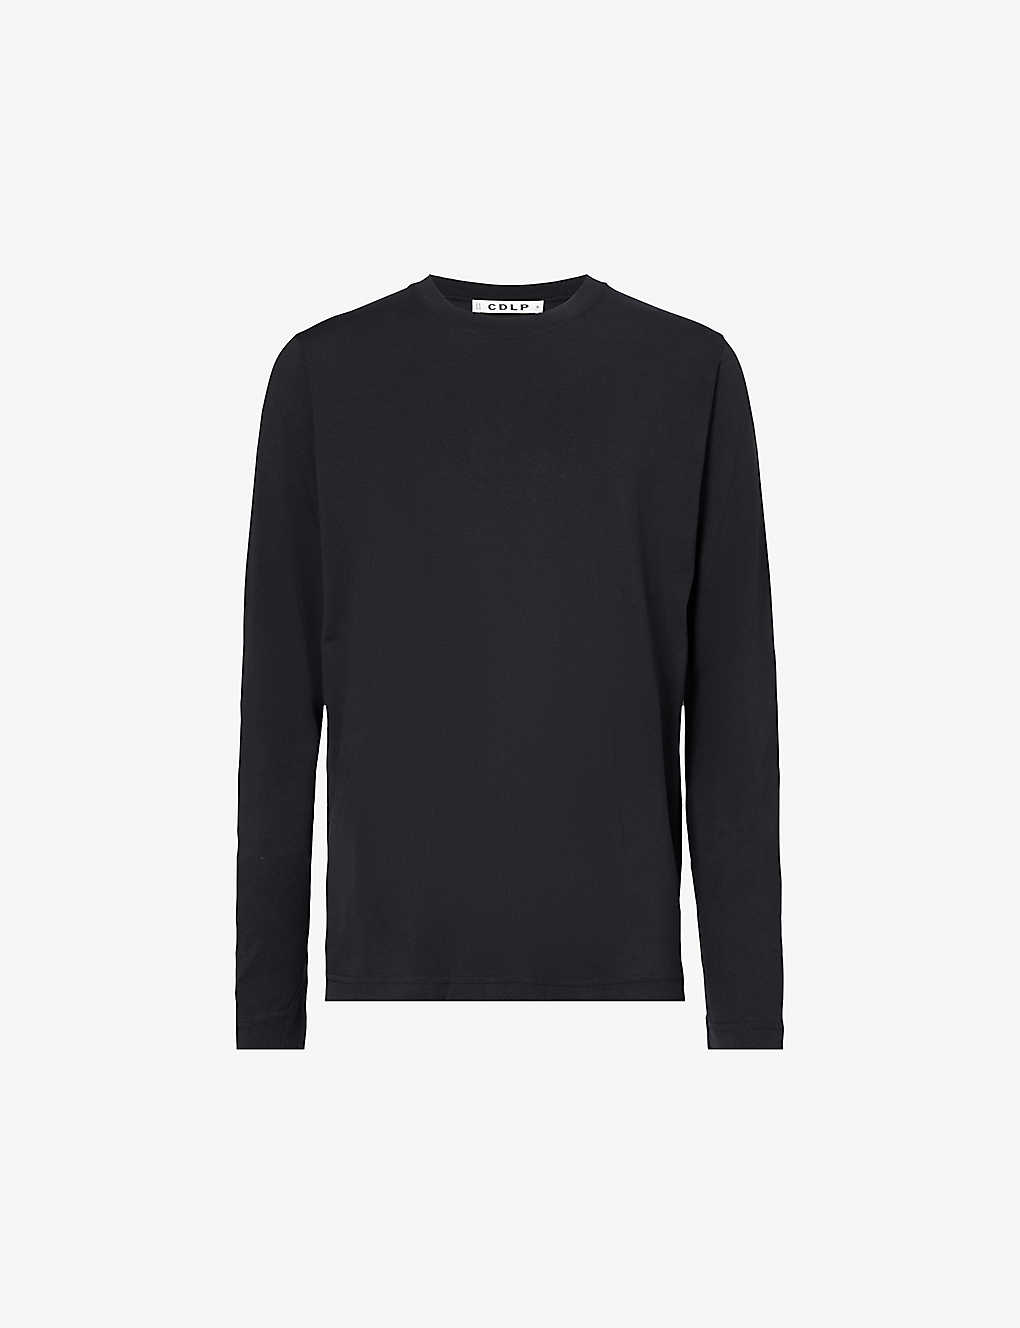 Shop Cdlp Men's Black Long-sleeved Crewneck Relaxed-fit Woven T-shirt